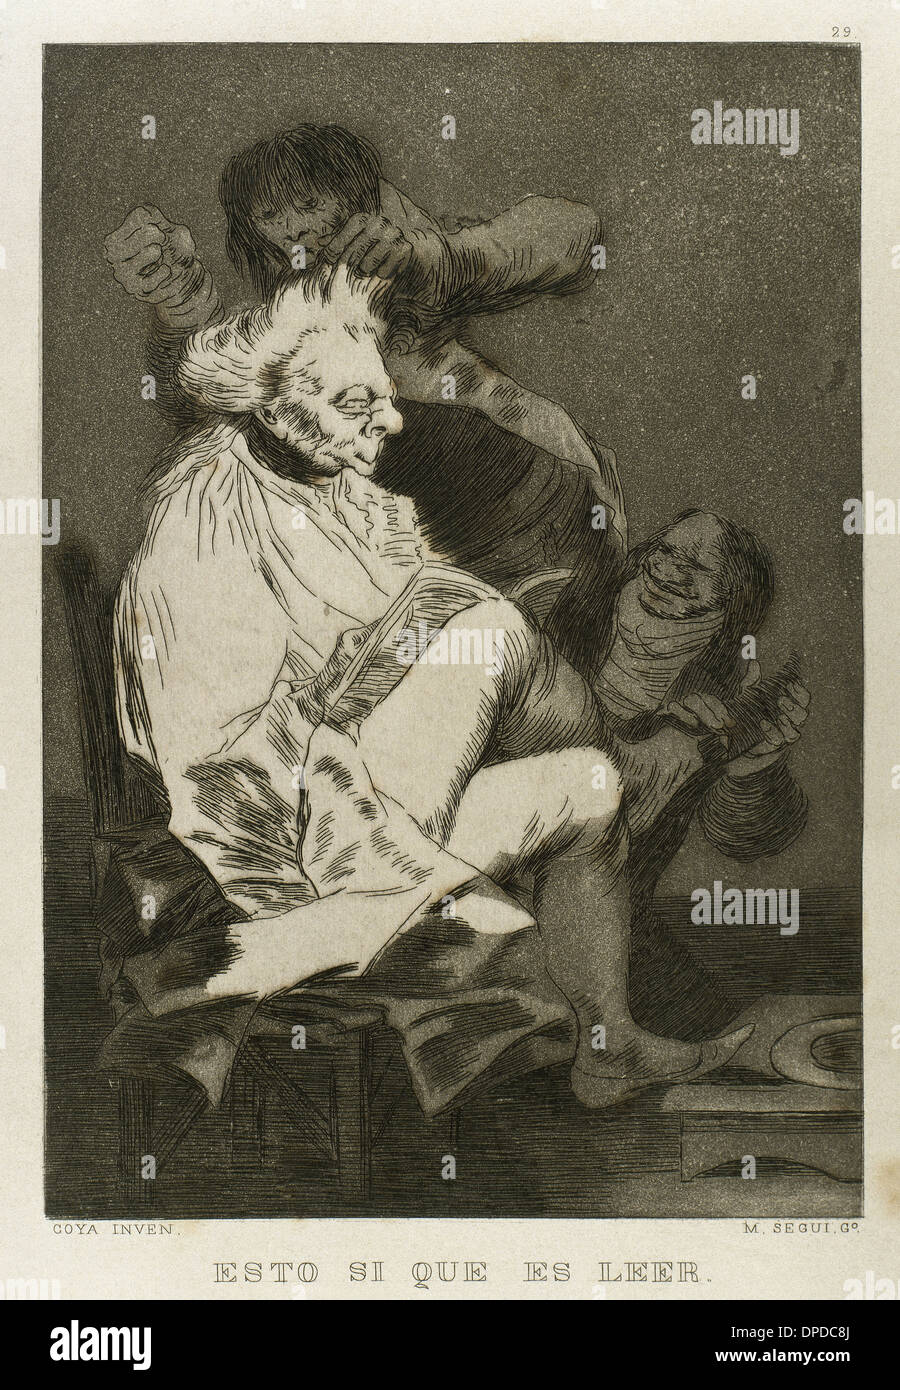 Goya (1746-1828). Spanish painter and printmaker. Los Caprichos. Esto si es ller (This are read). Number 29. Aquatint. Stock Photo